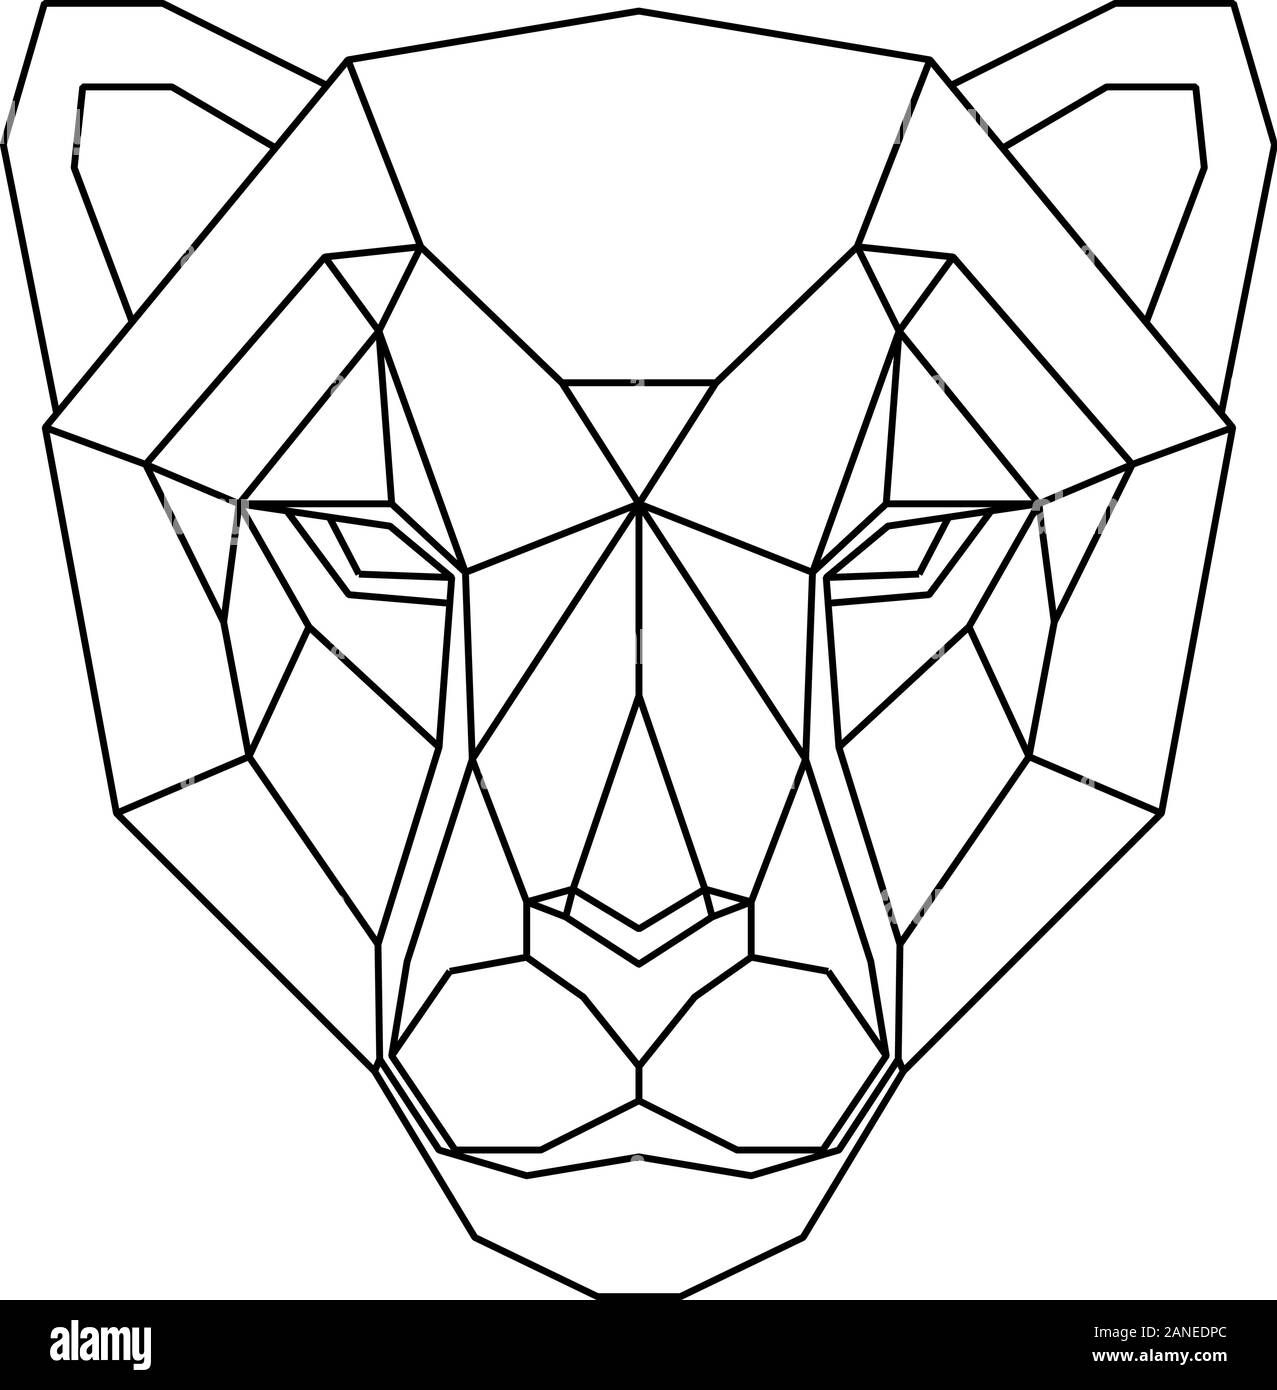 Abstract polygonal head of cheetah. Geometric vector illustration. Stock Vector